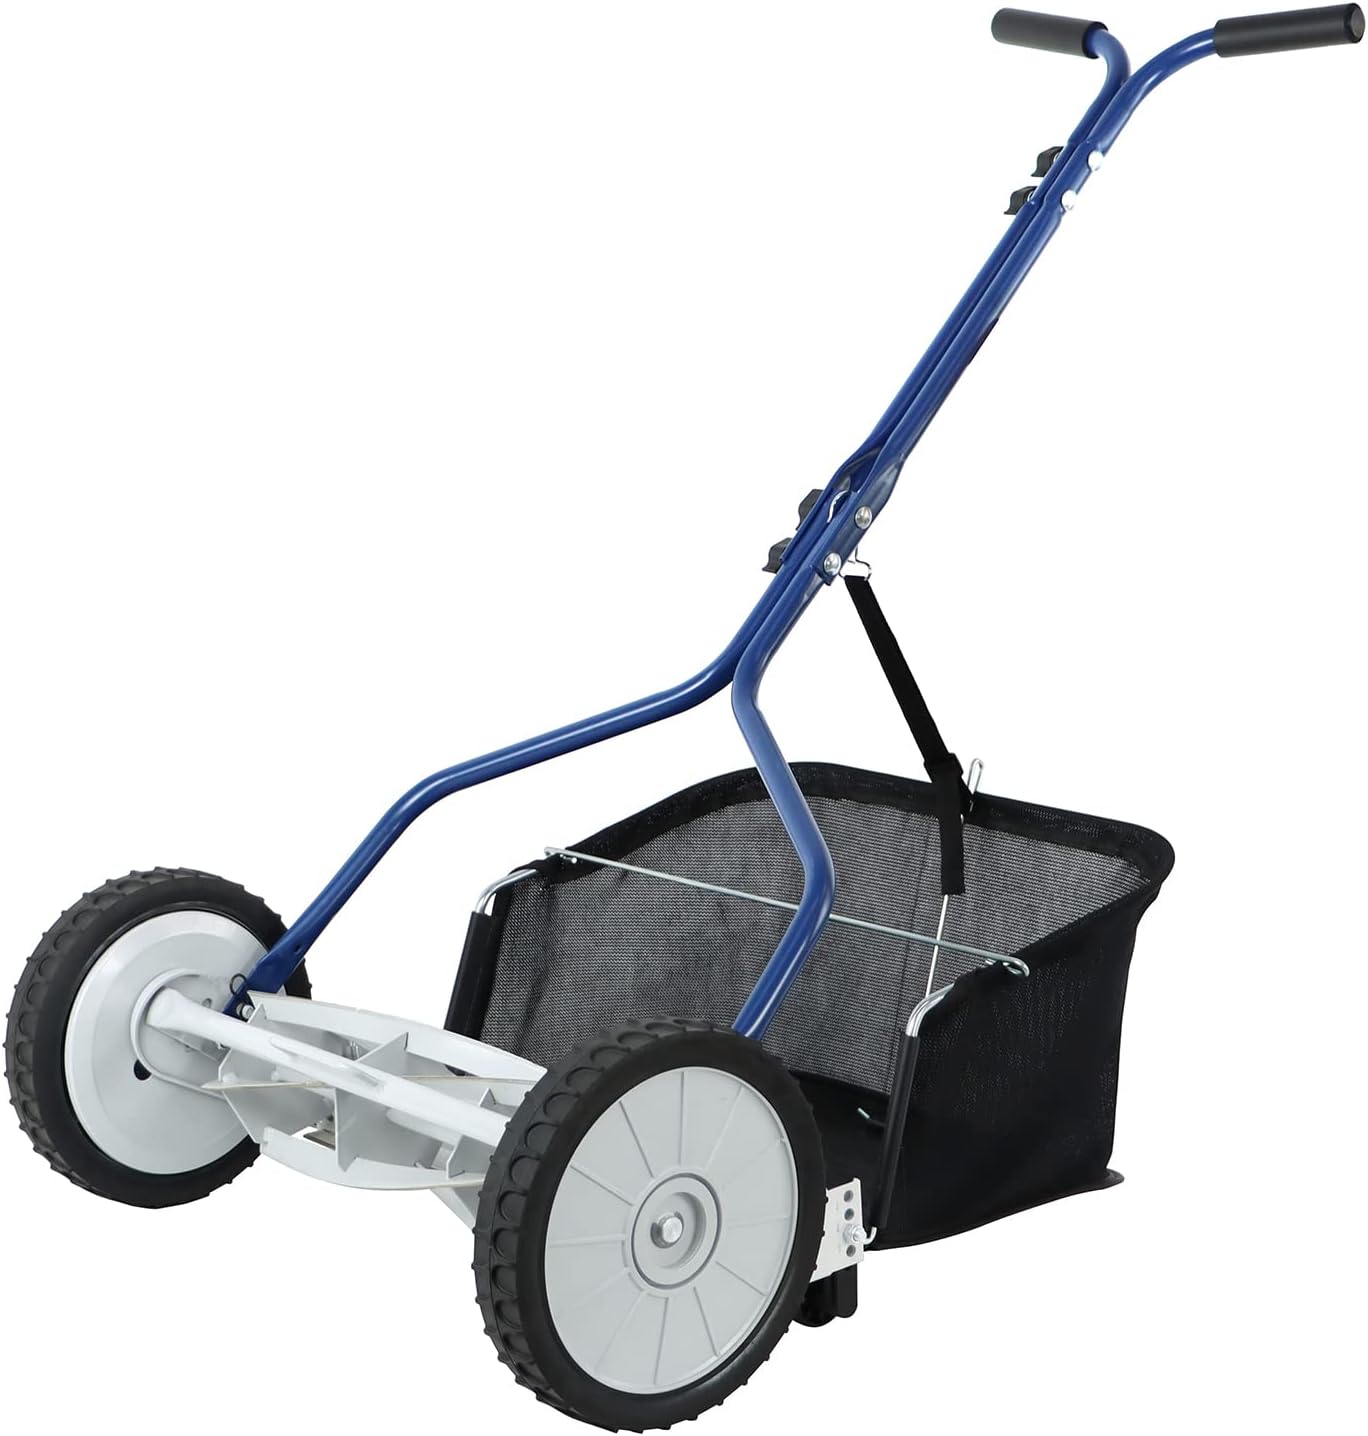 Amazon Basics 18-Inch 5-Blade Push Reel Lawn Mower [...]